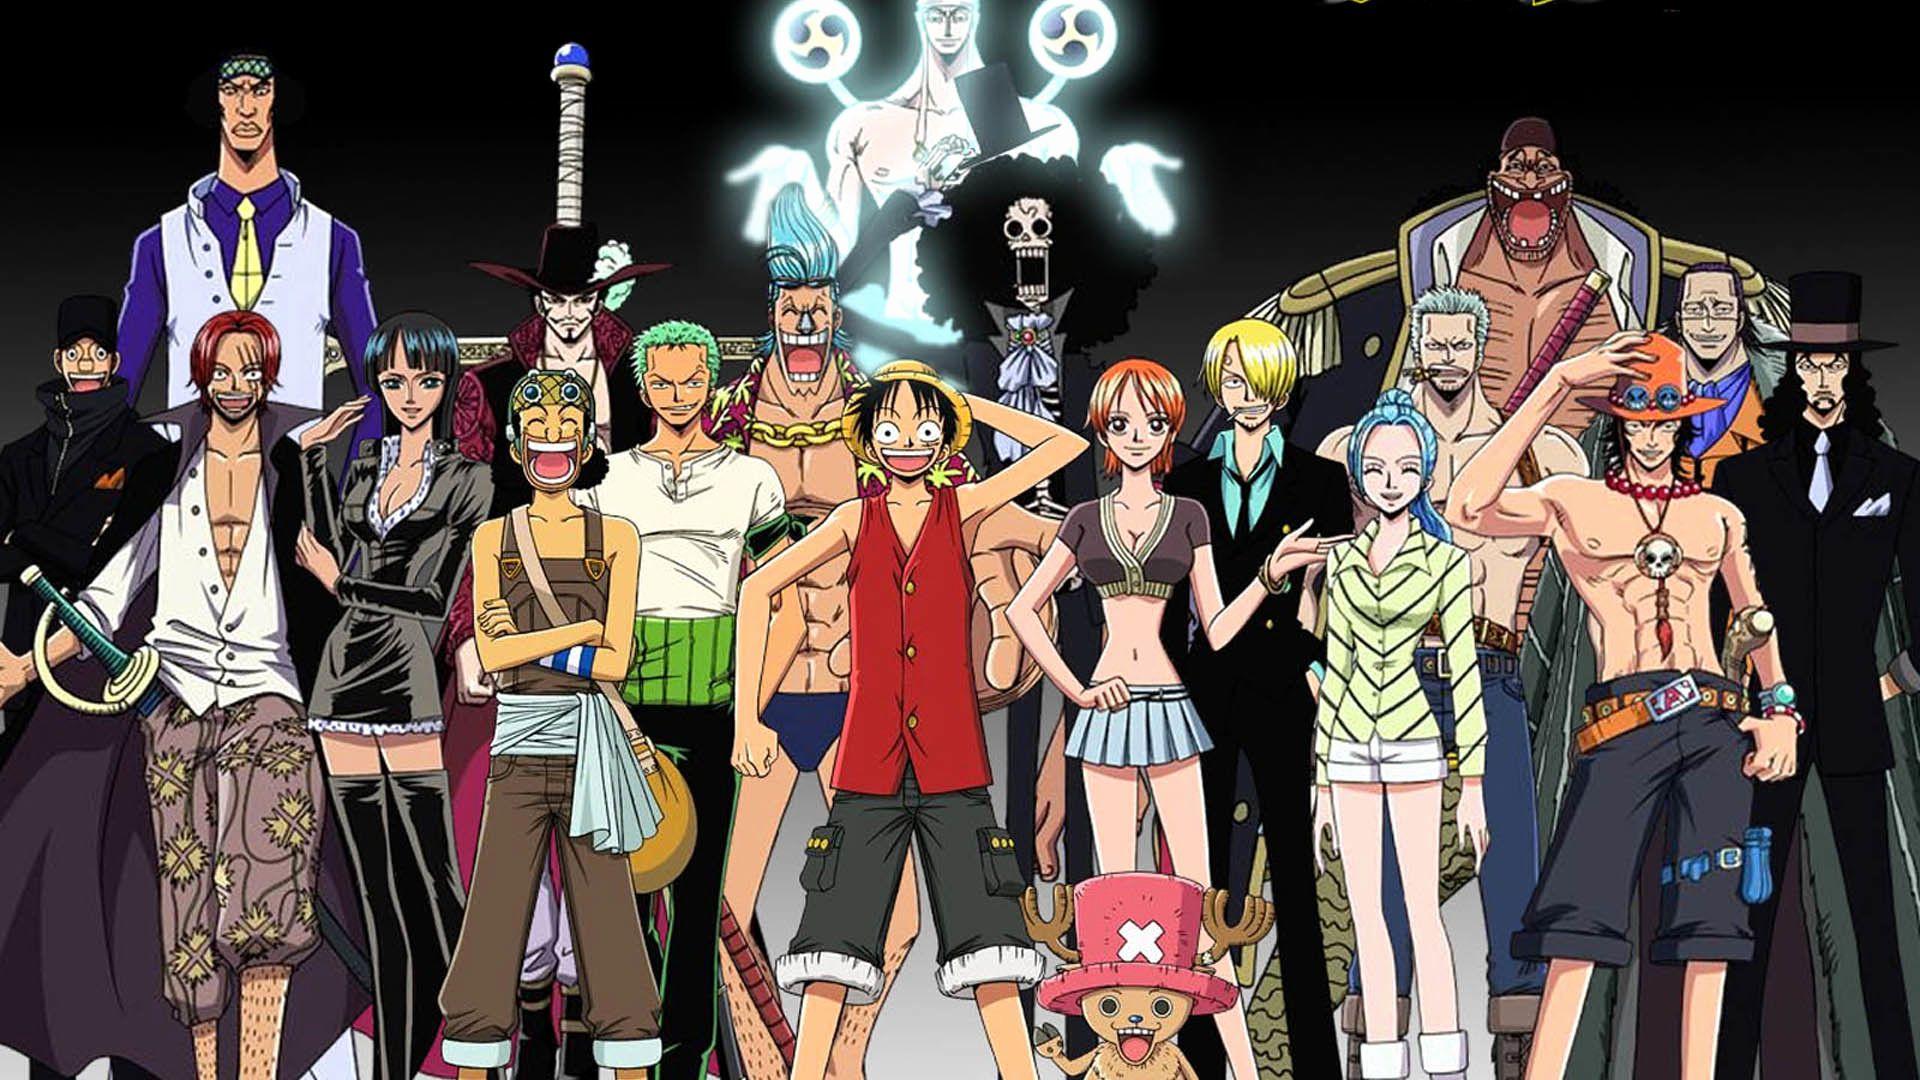 Download 25 Wallpaper One Piece Crew terbaru 2019